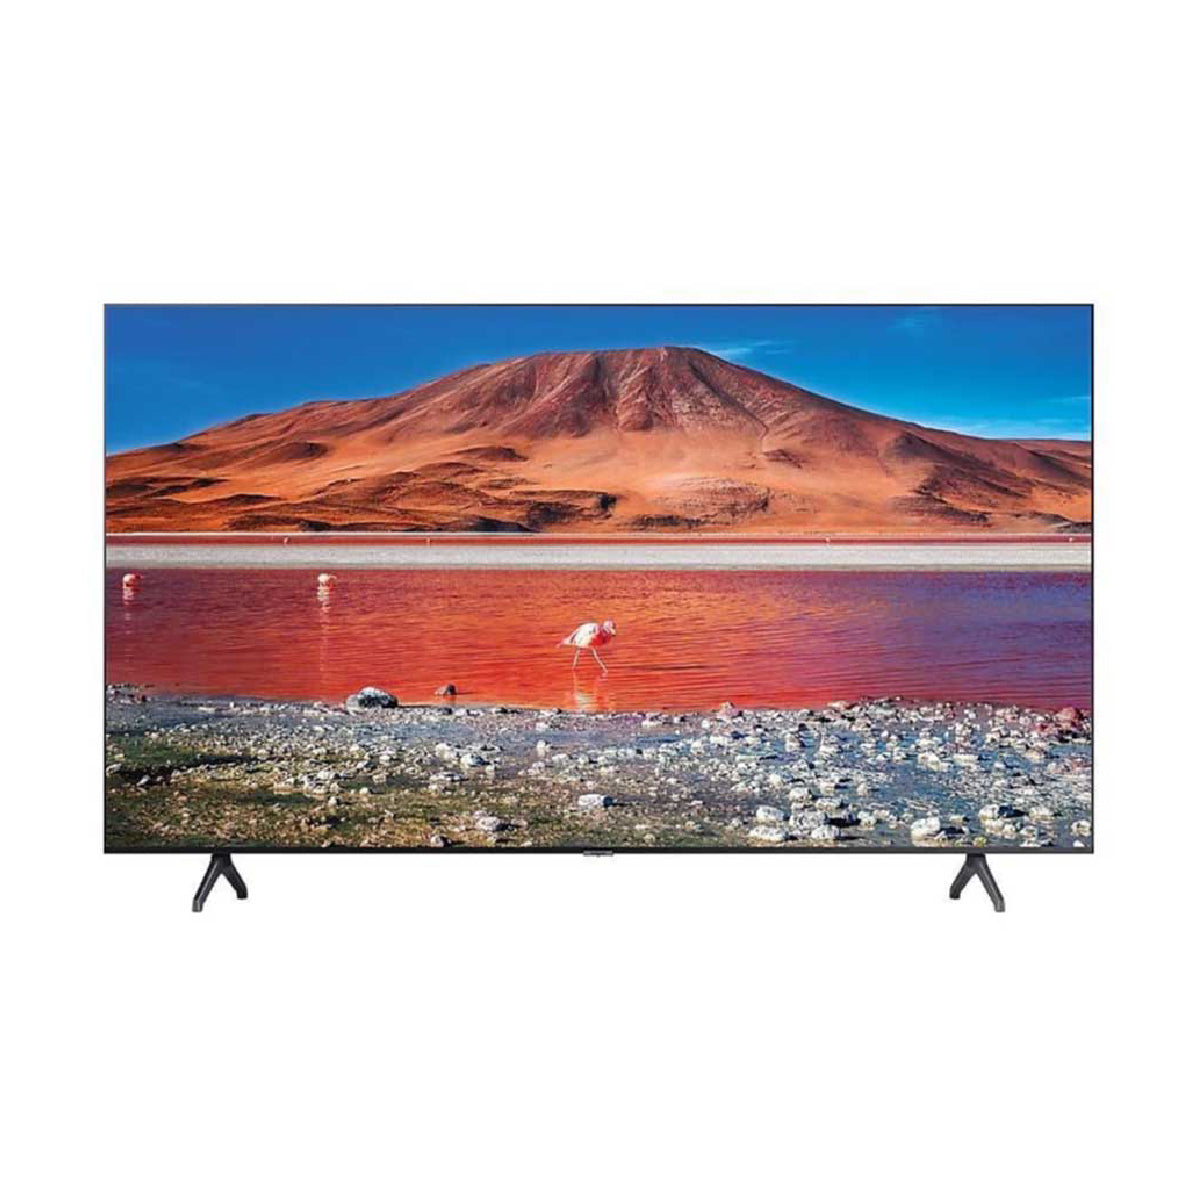 SAMSUNG 55-inch Class Crystal UHD TU-7000 Series - 4K UHD HDR Smart TV with Alexa Built-in